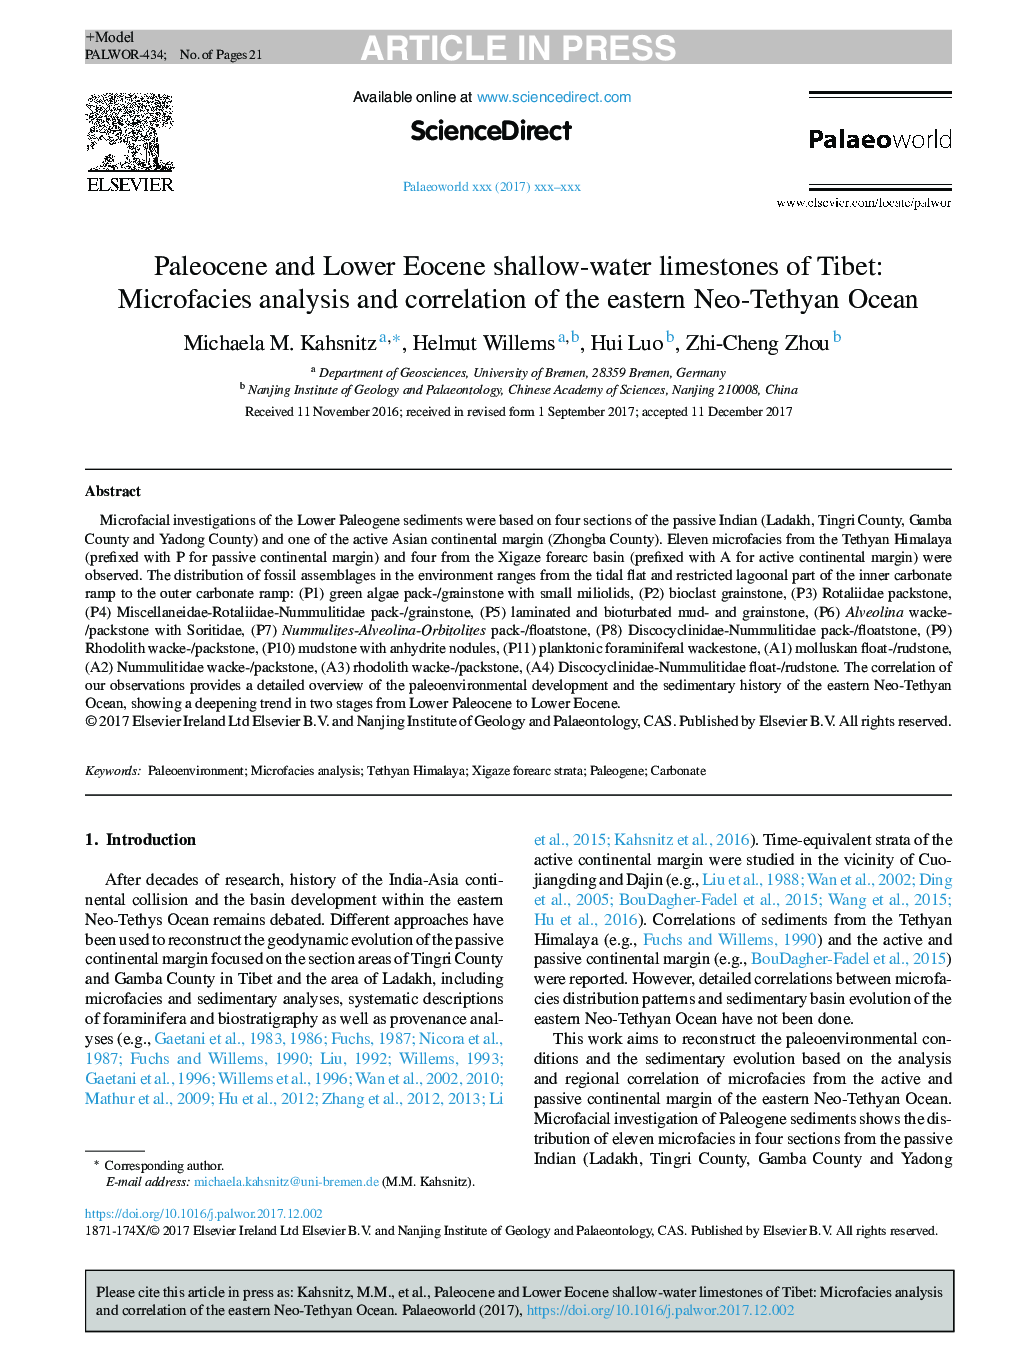 Paleocene and Lower Eocene shallow-water limestones of Tibet: Microfacies analysis and correlation of the eastern Neo-Tethyan Ocean